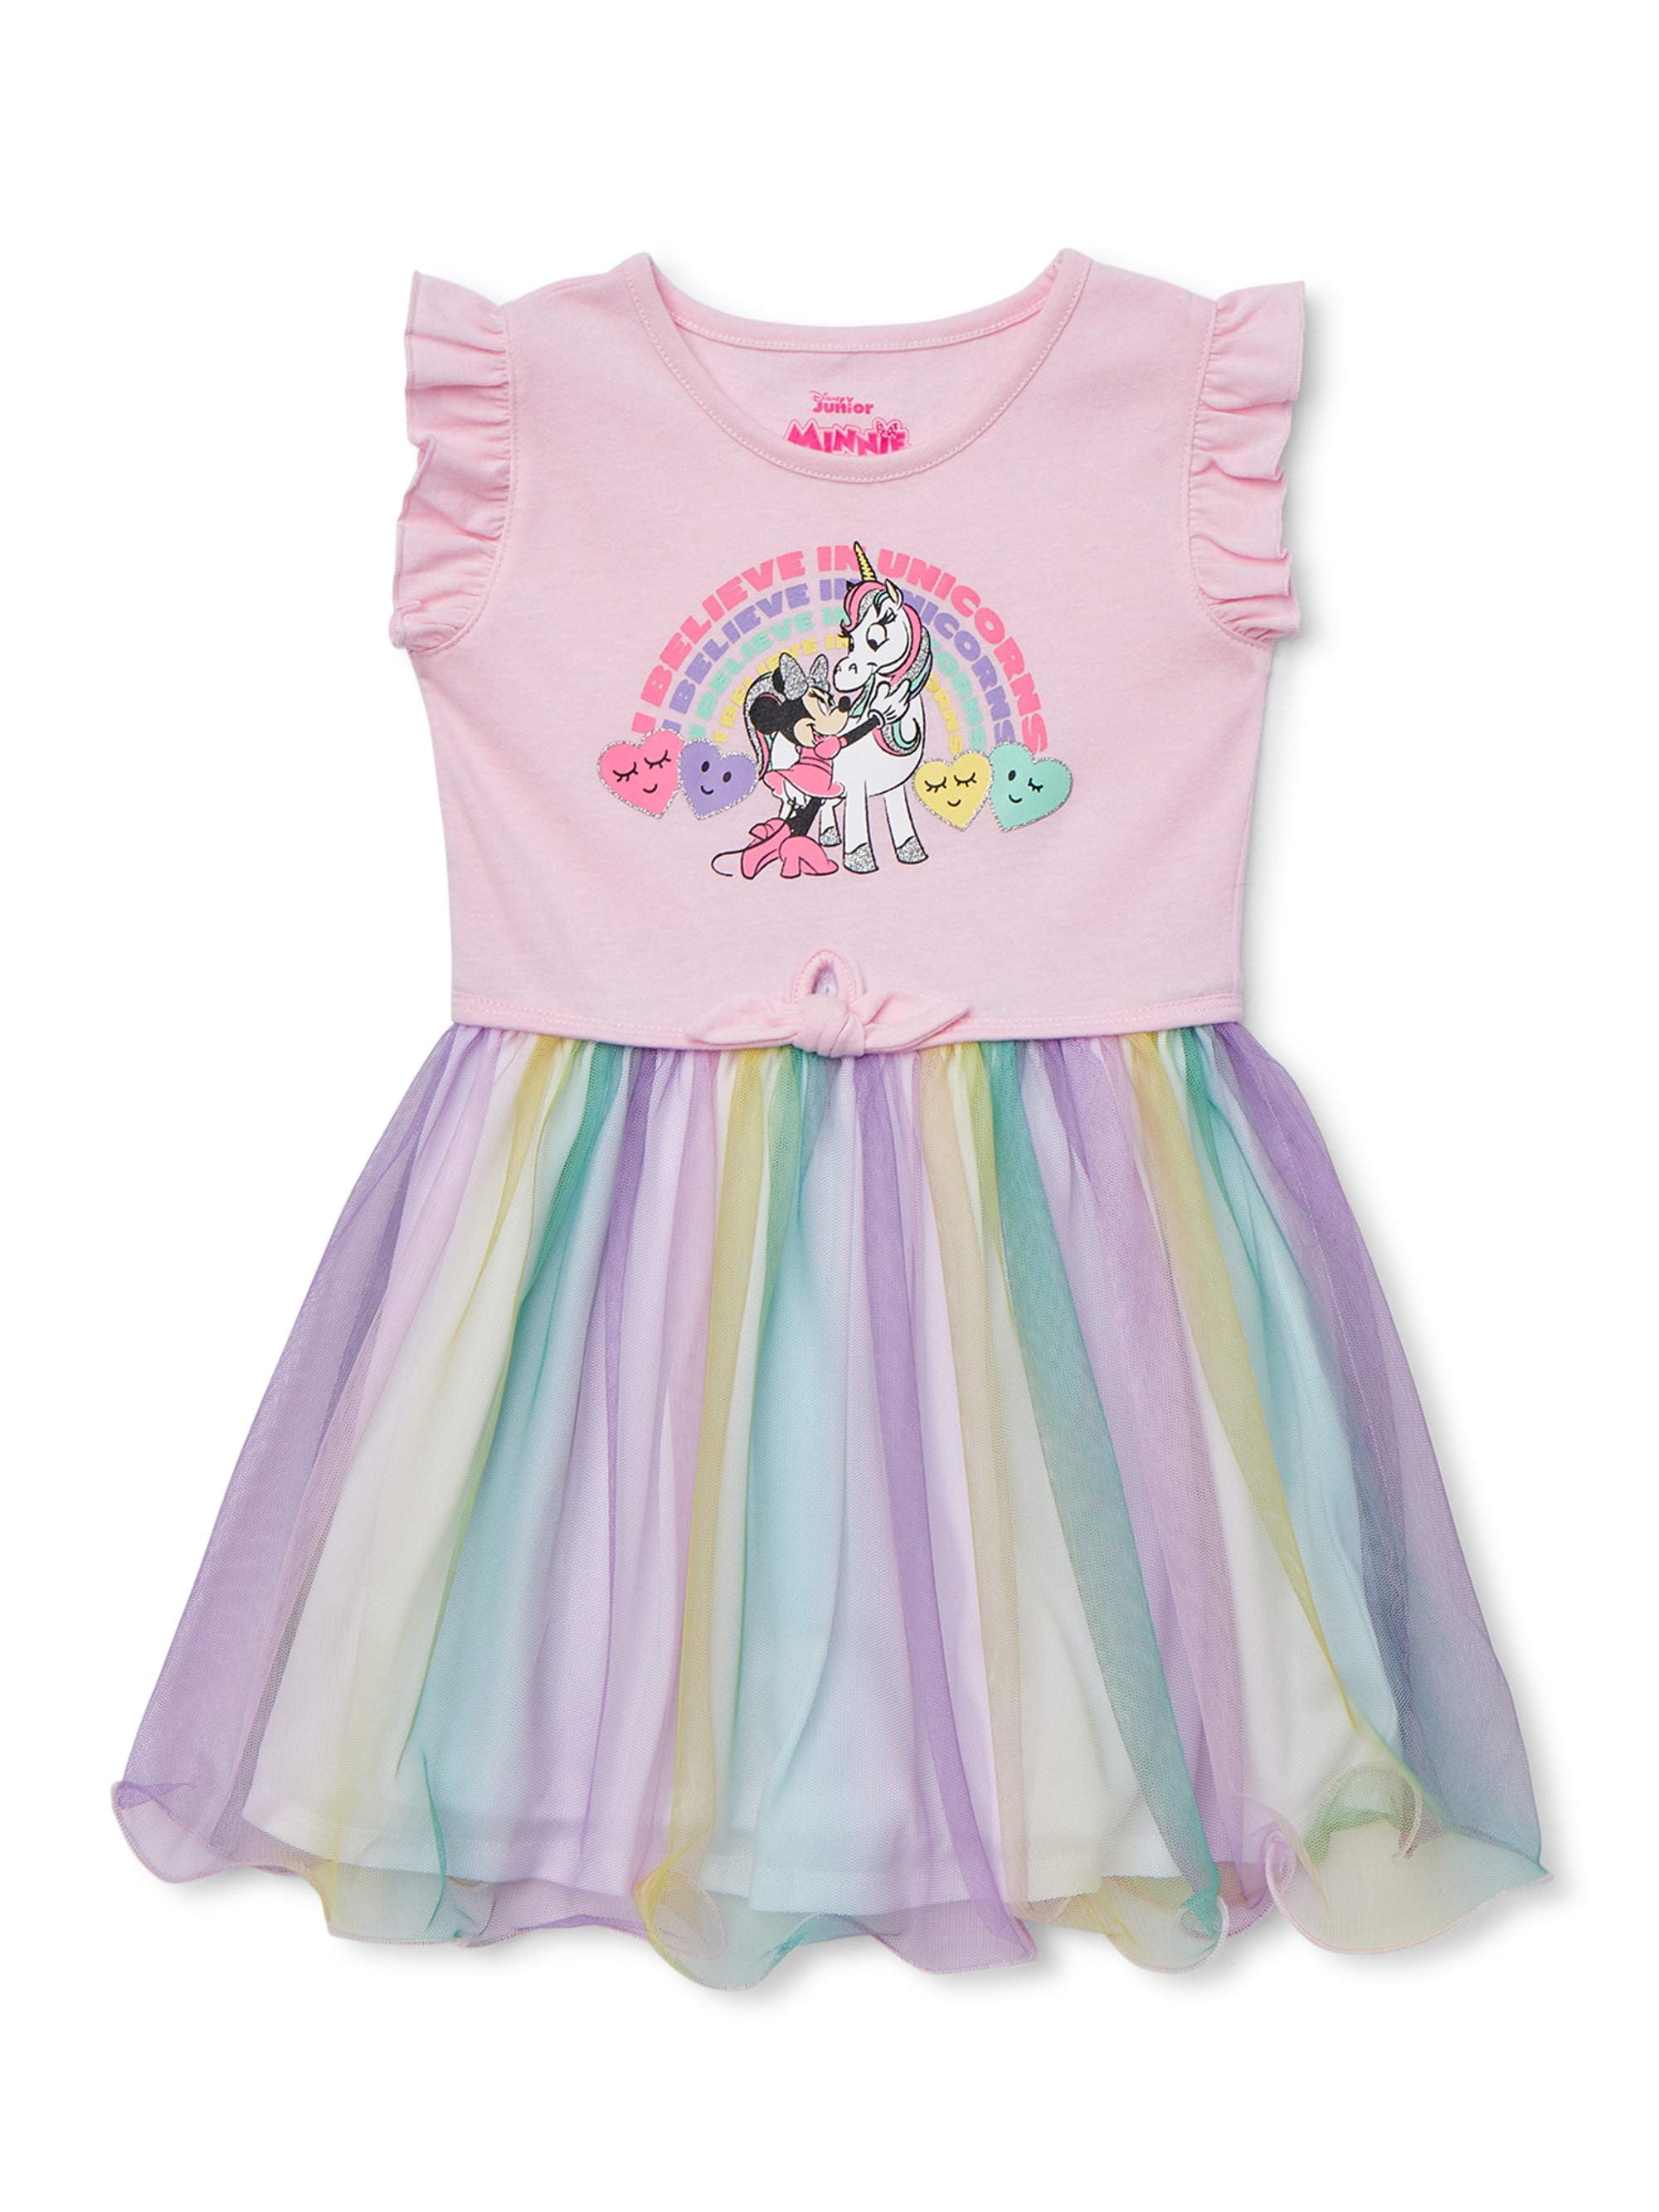 Kid Girl Children Sleeveless Minnie Mouse Tutu Dress Birthday Party Dresses Cute